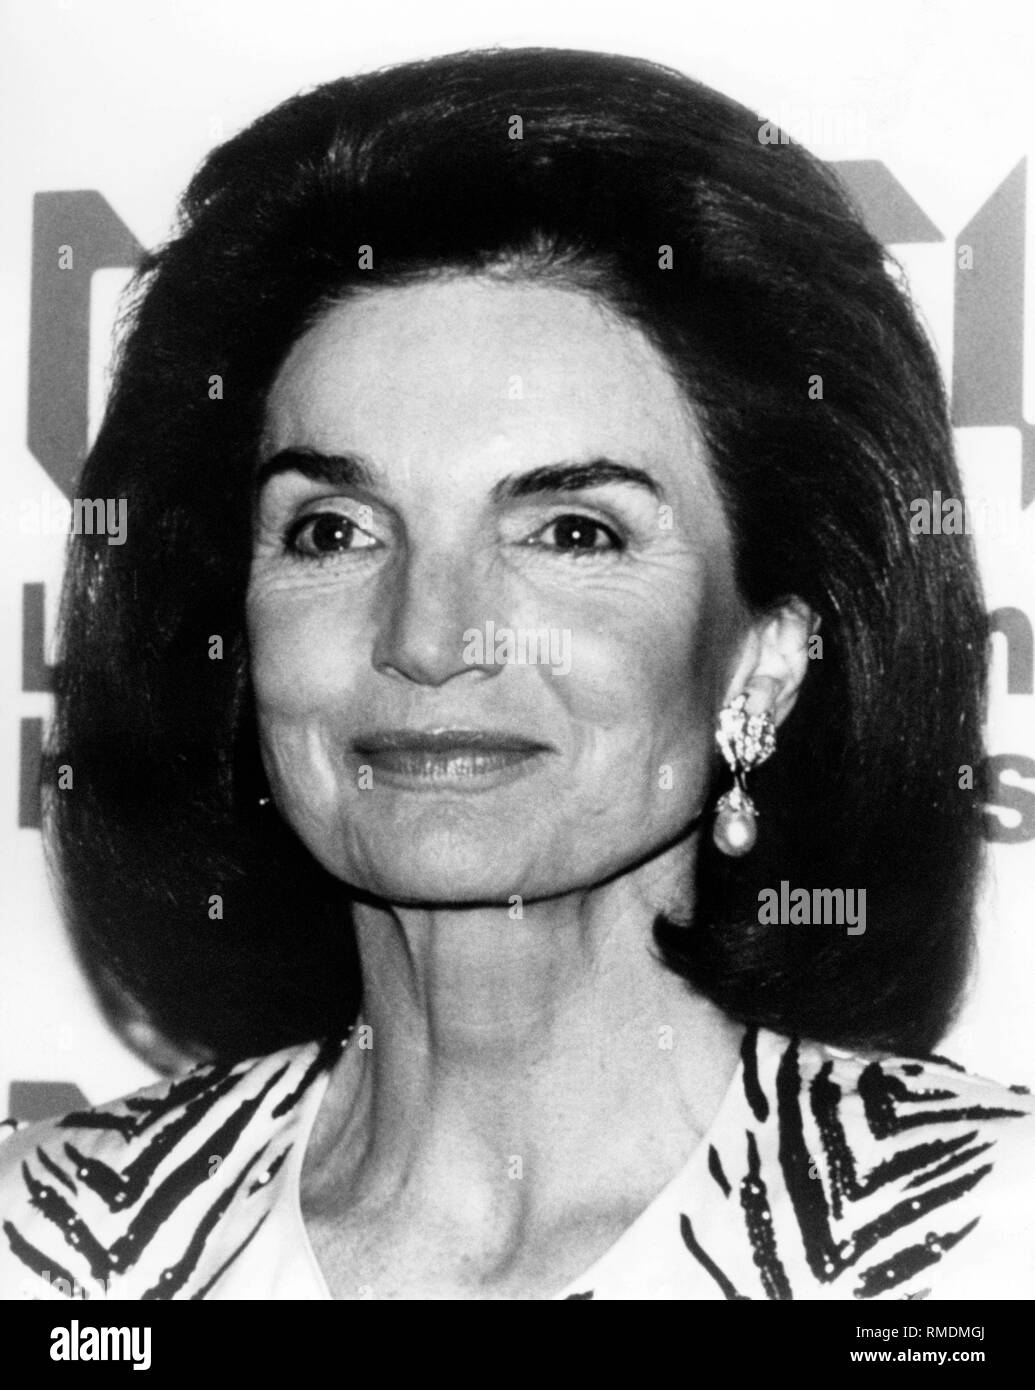 Jacqueline Kennedy, journalist, USA, portrait probably from around 1990. Stock Photo